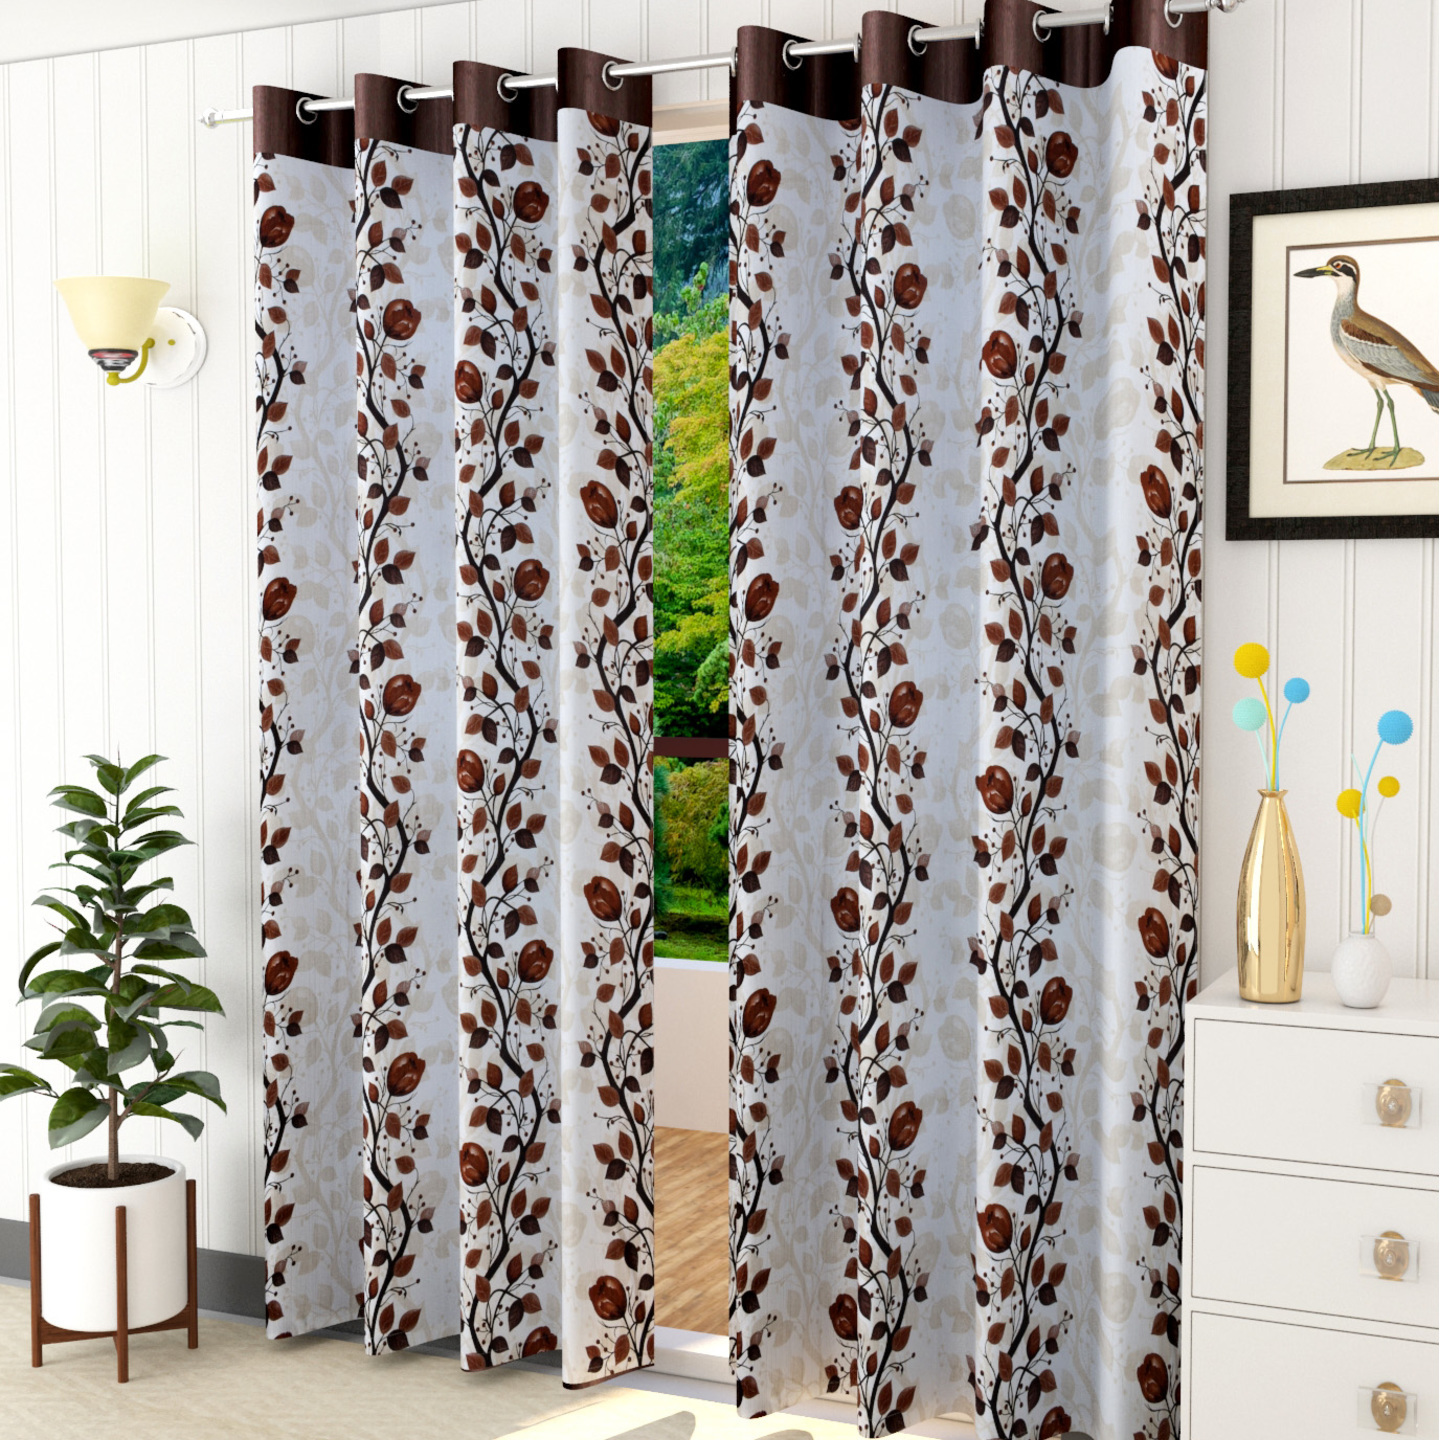  Handtex Home Long Crush Printed Curtains for Door 7 Feet Pack of 2,Coffee (Coffee, Door 7 Feet) 